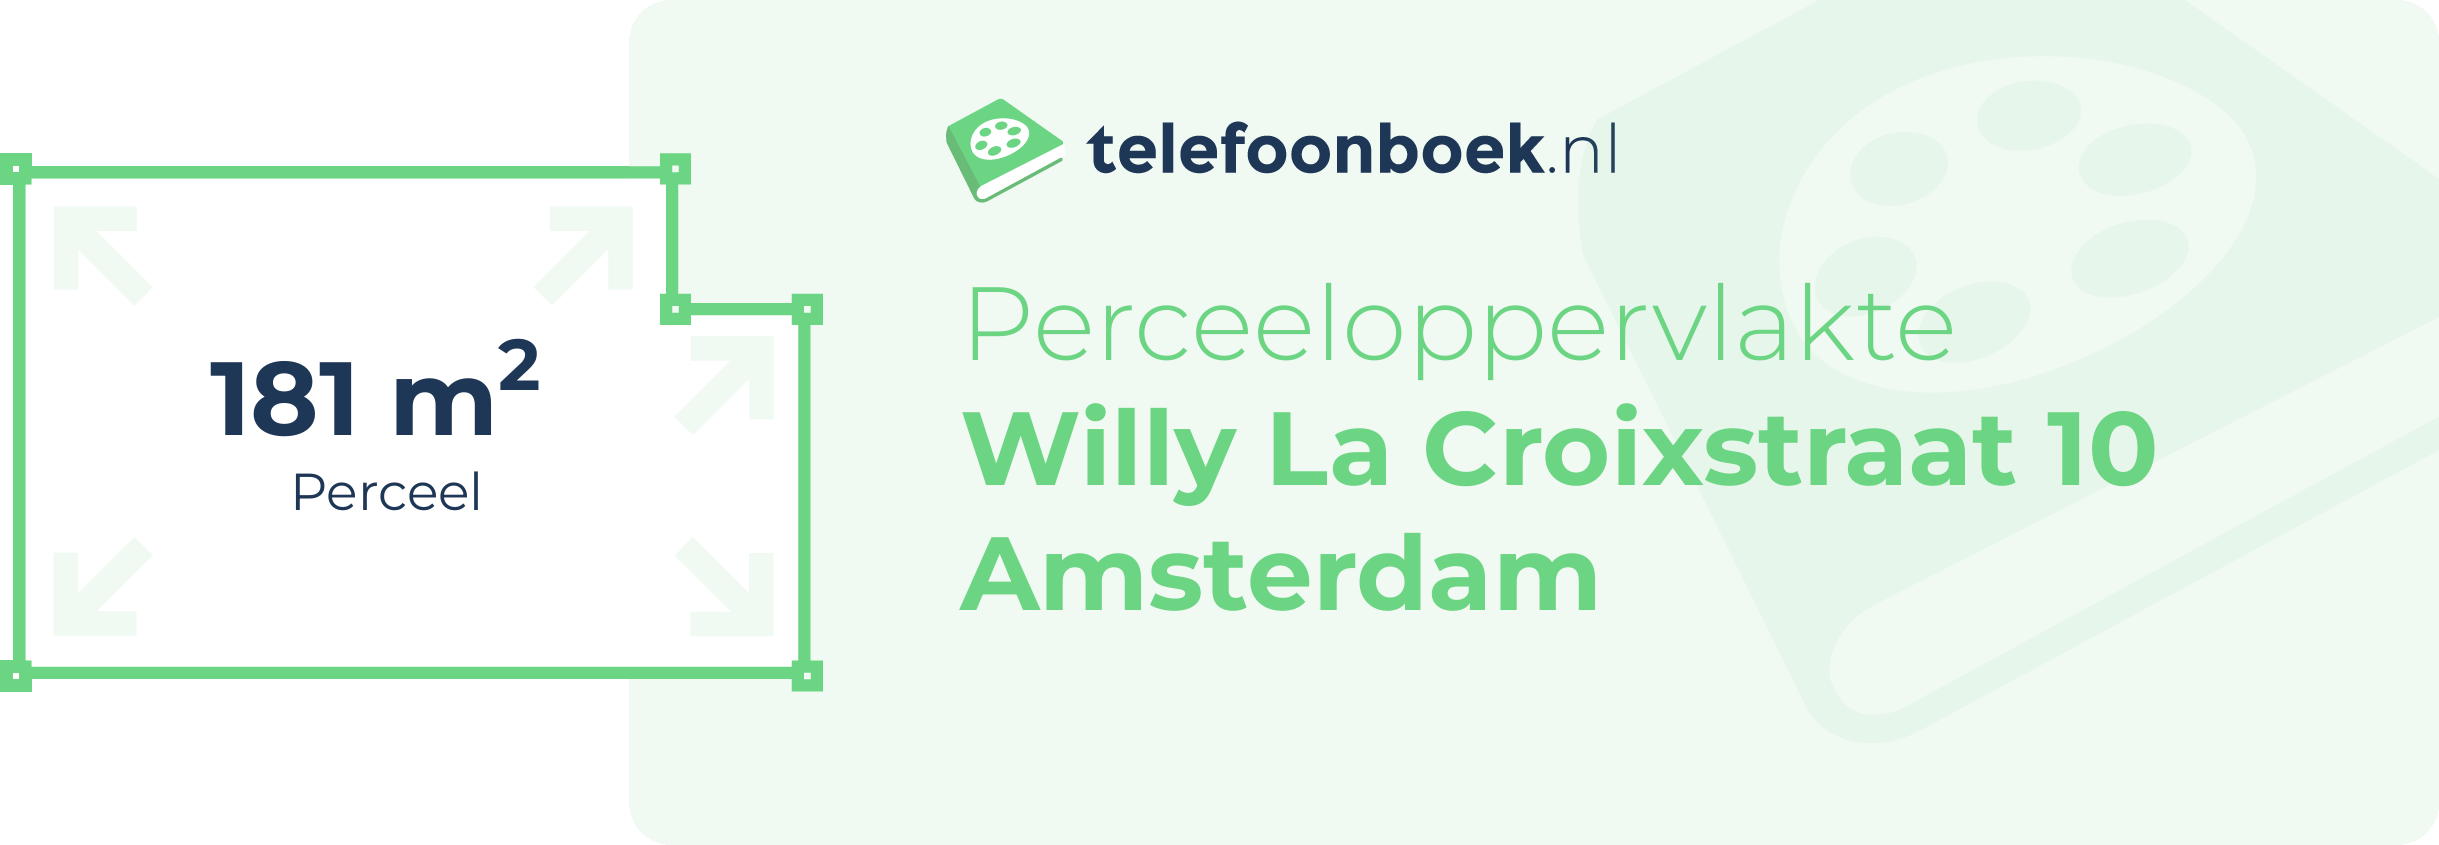 Perceeloppervlakte Willy La Croixstraat 10 Amsterdam